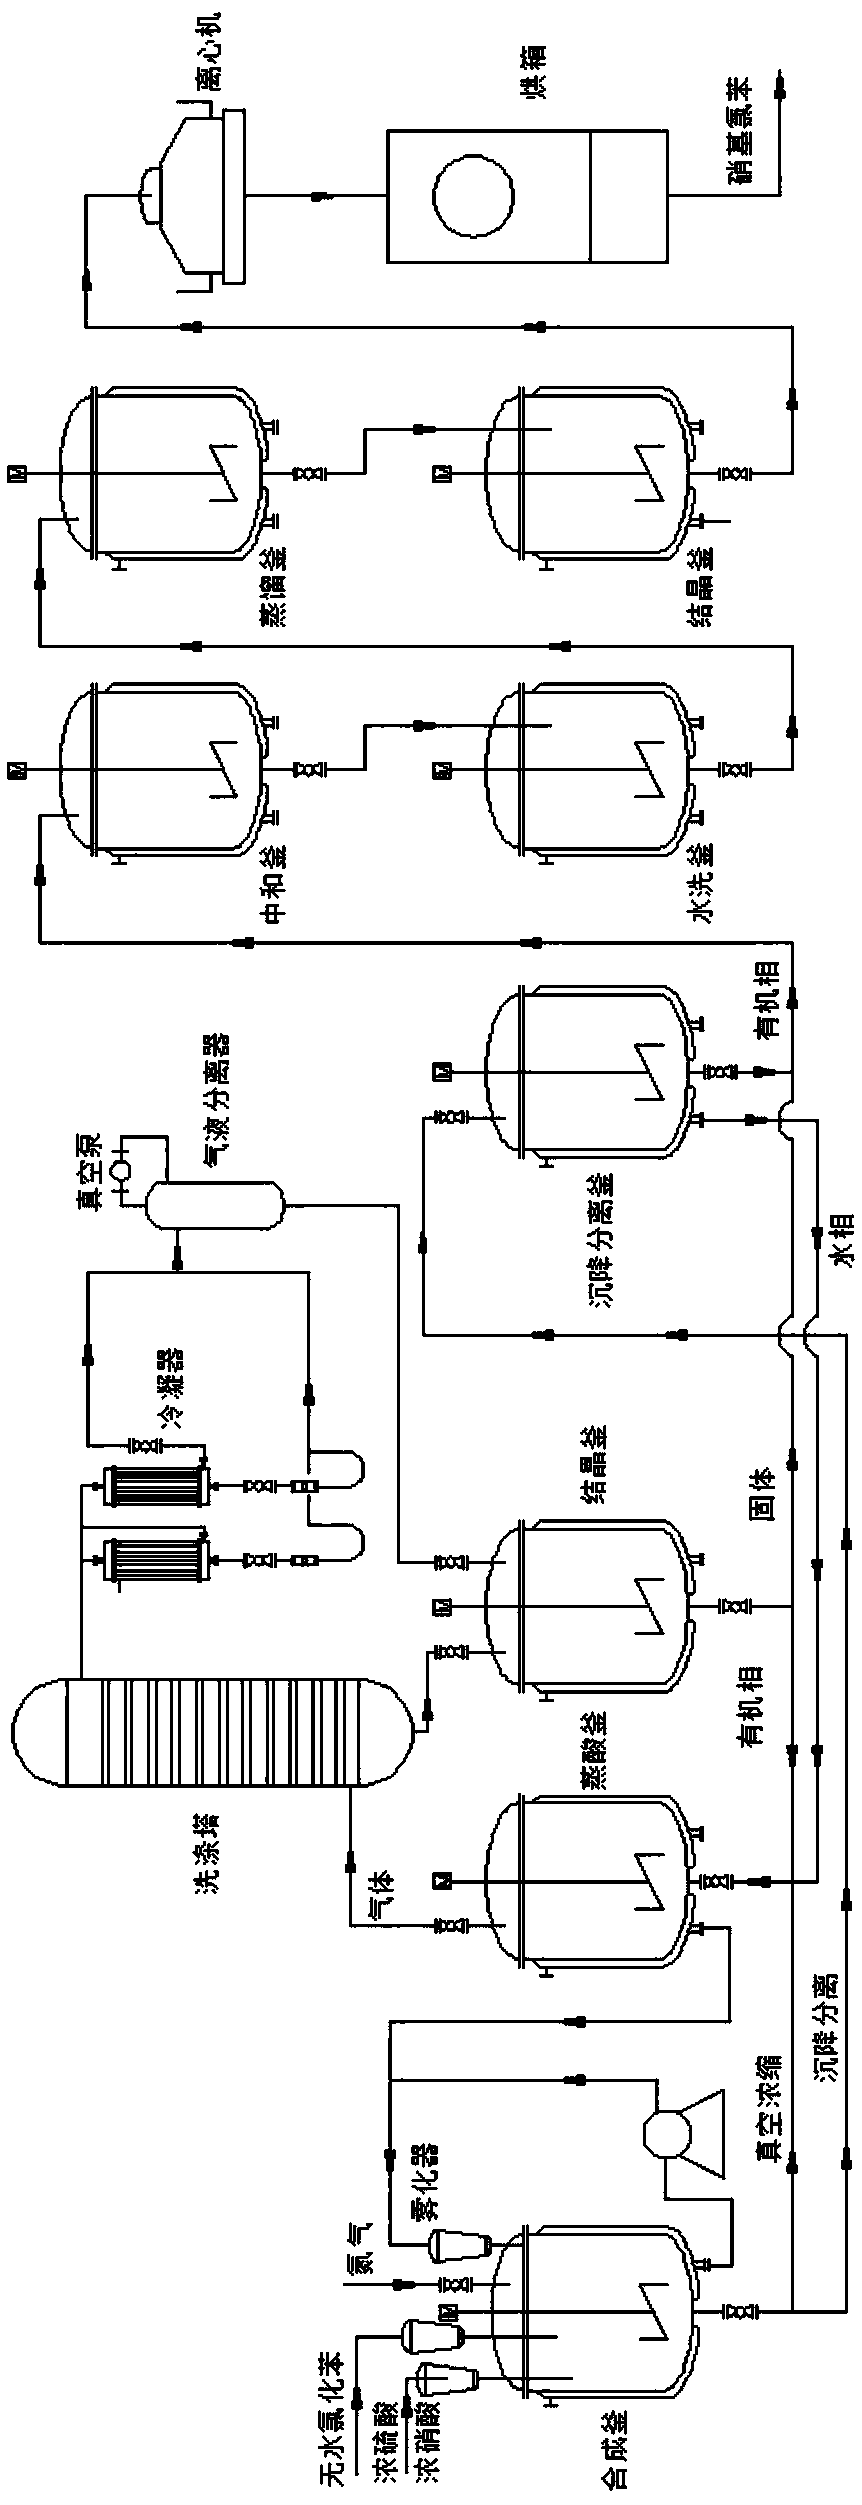 Method of preparing nitrochlorobenzene by adopting vacuum concentration process